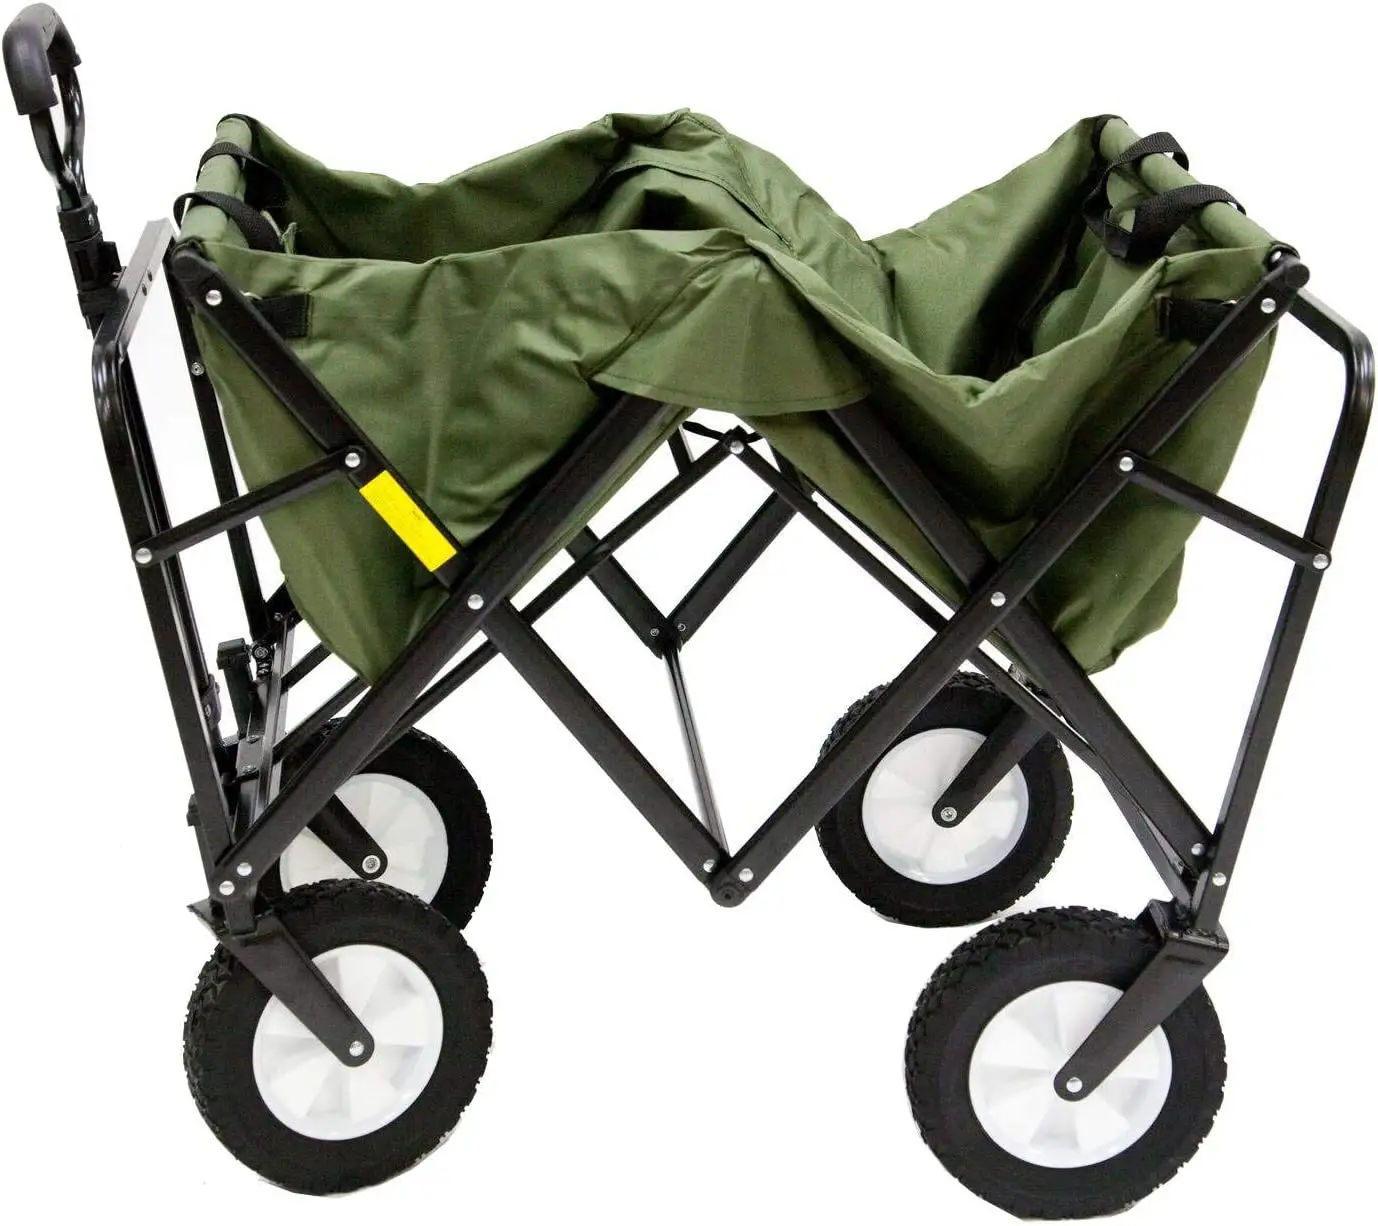 Portable Folding Picnic Camping Wagon Cart outdoor camping beach cart foldable trolley beach wagon hand cart with wheels